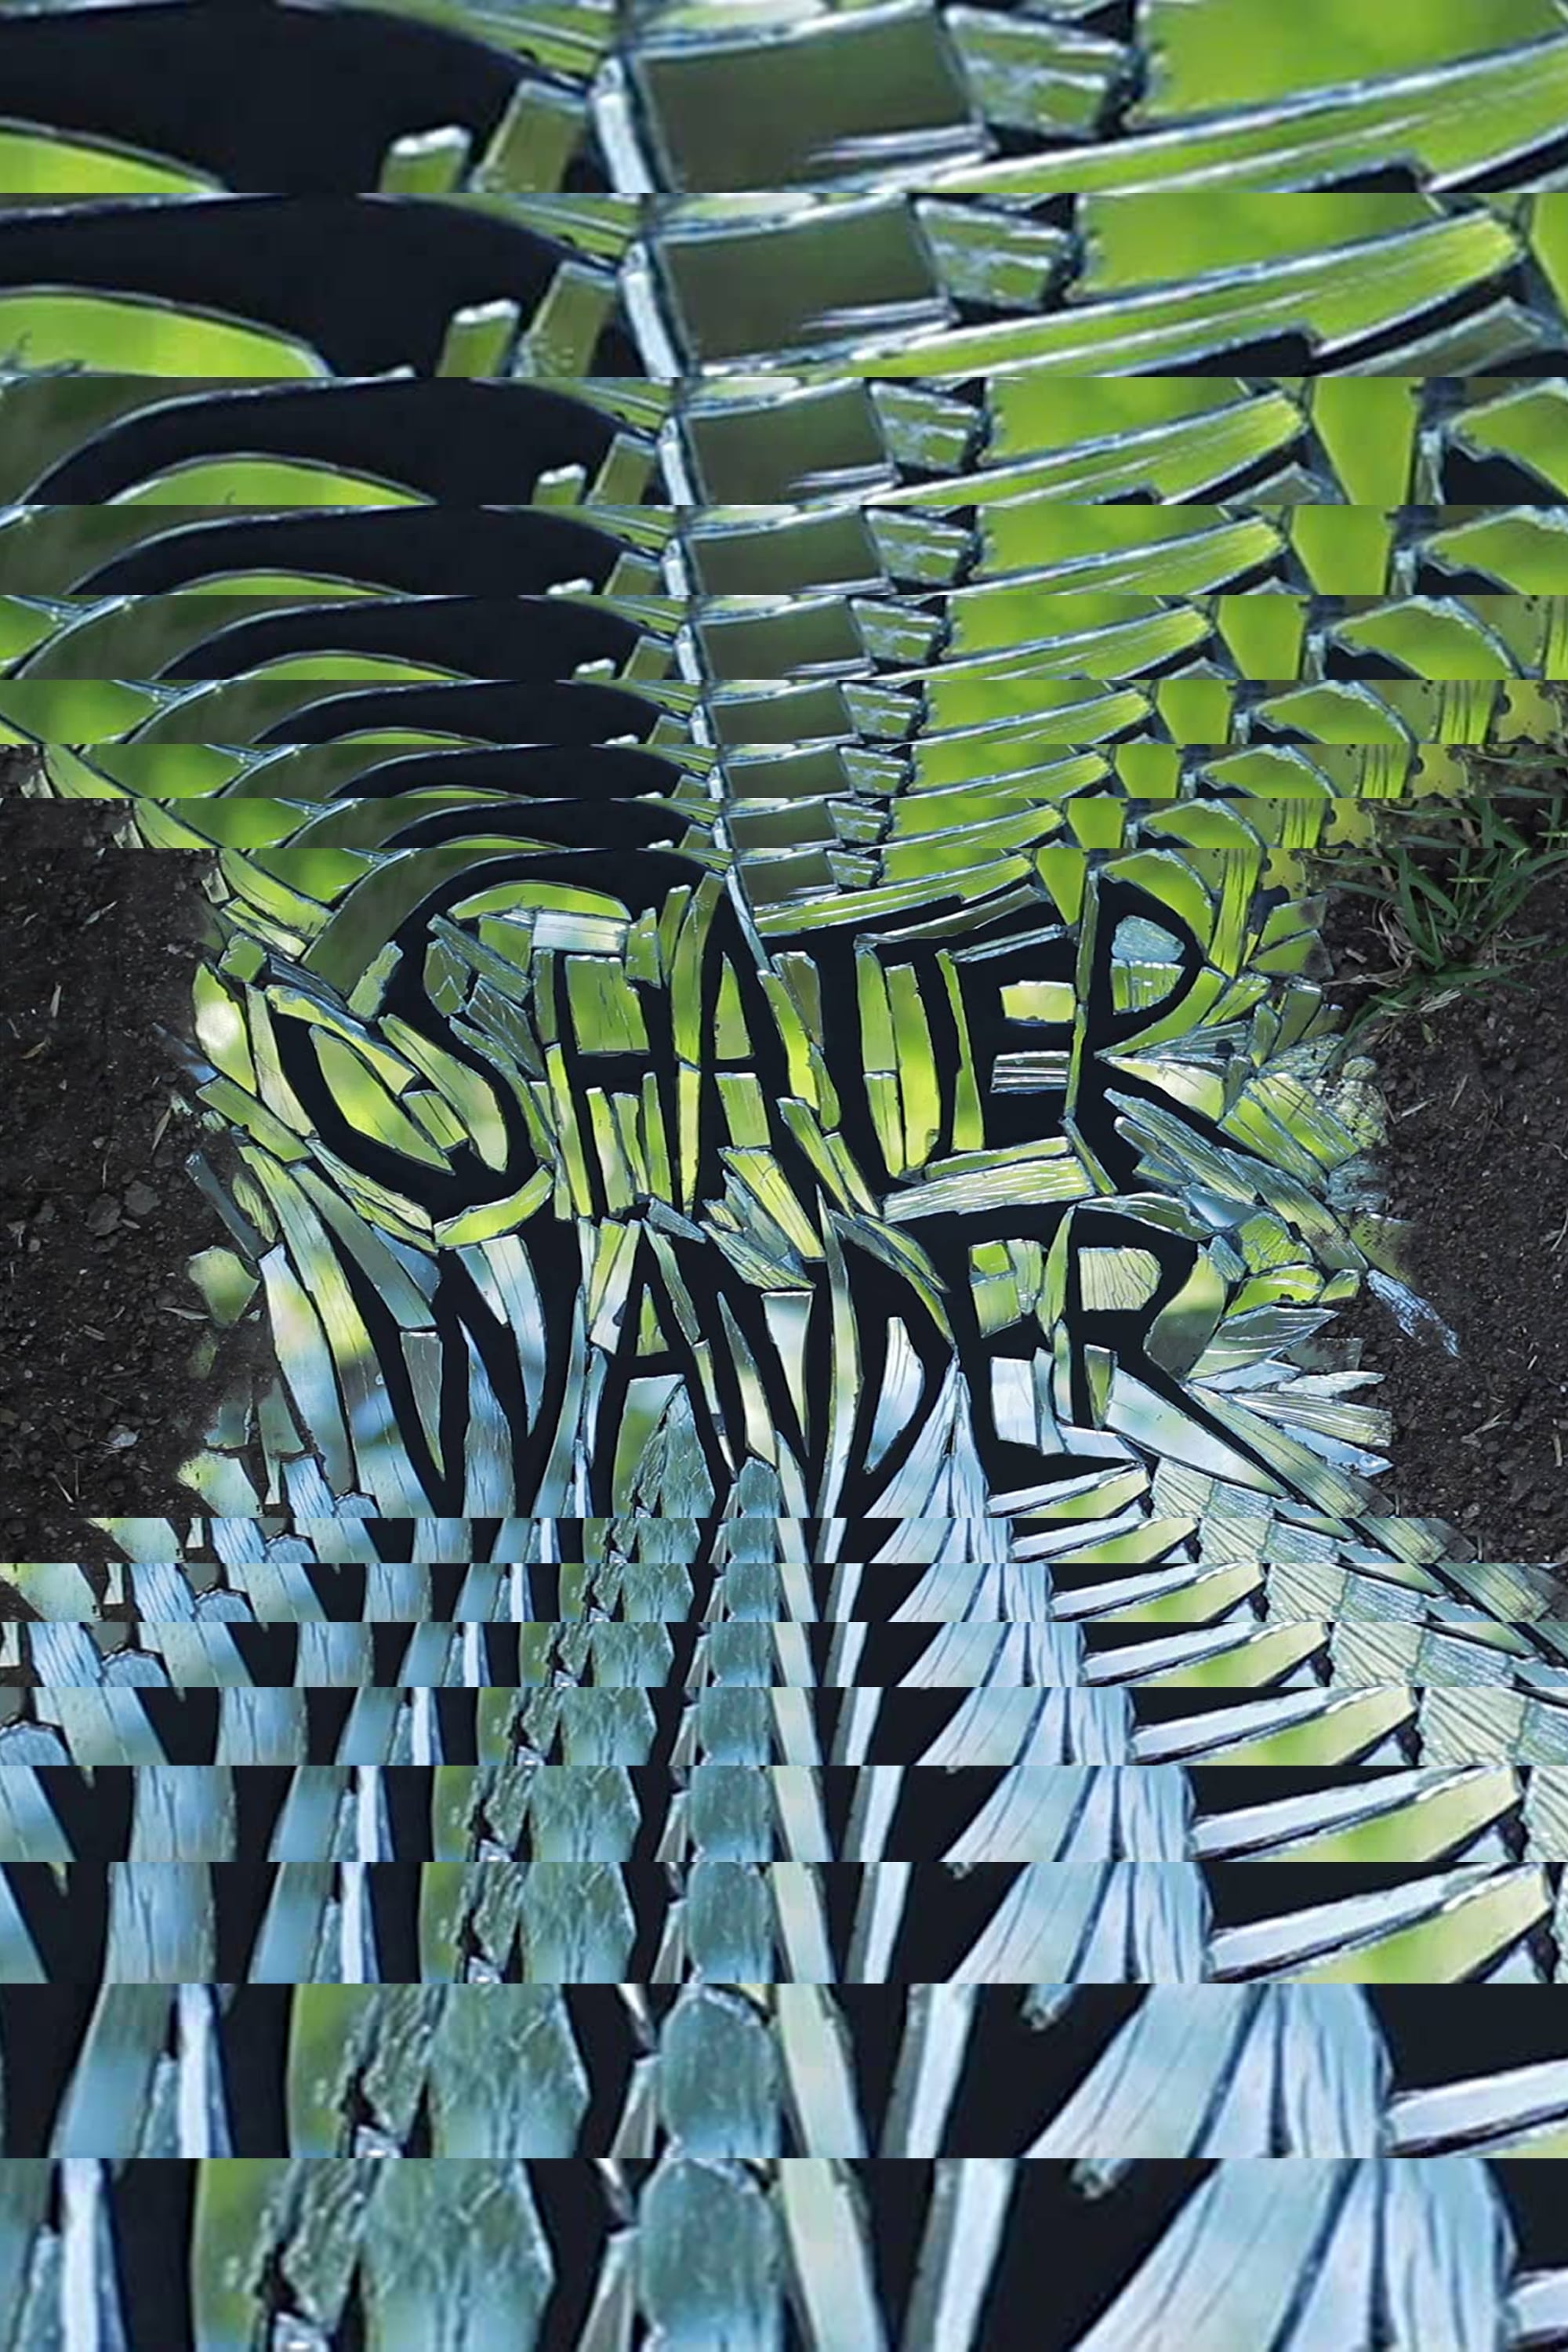 Shatter Wander